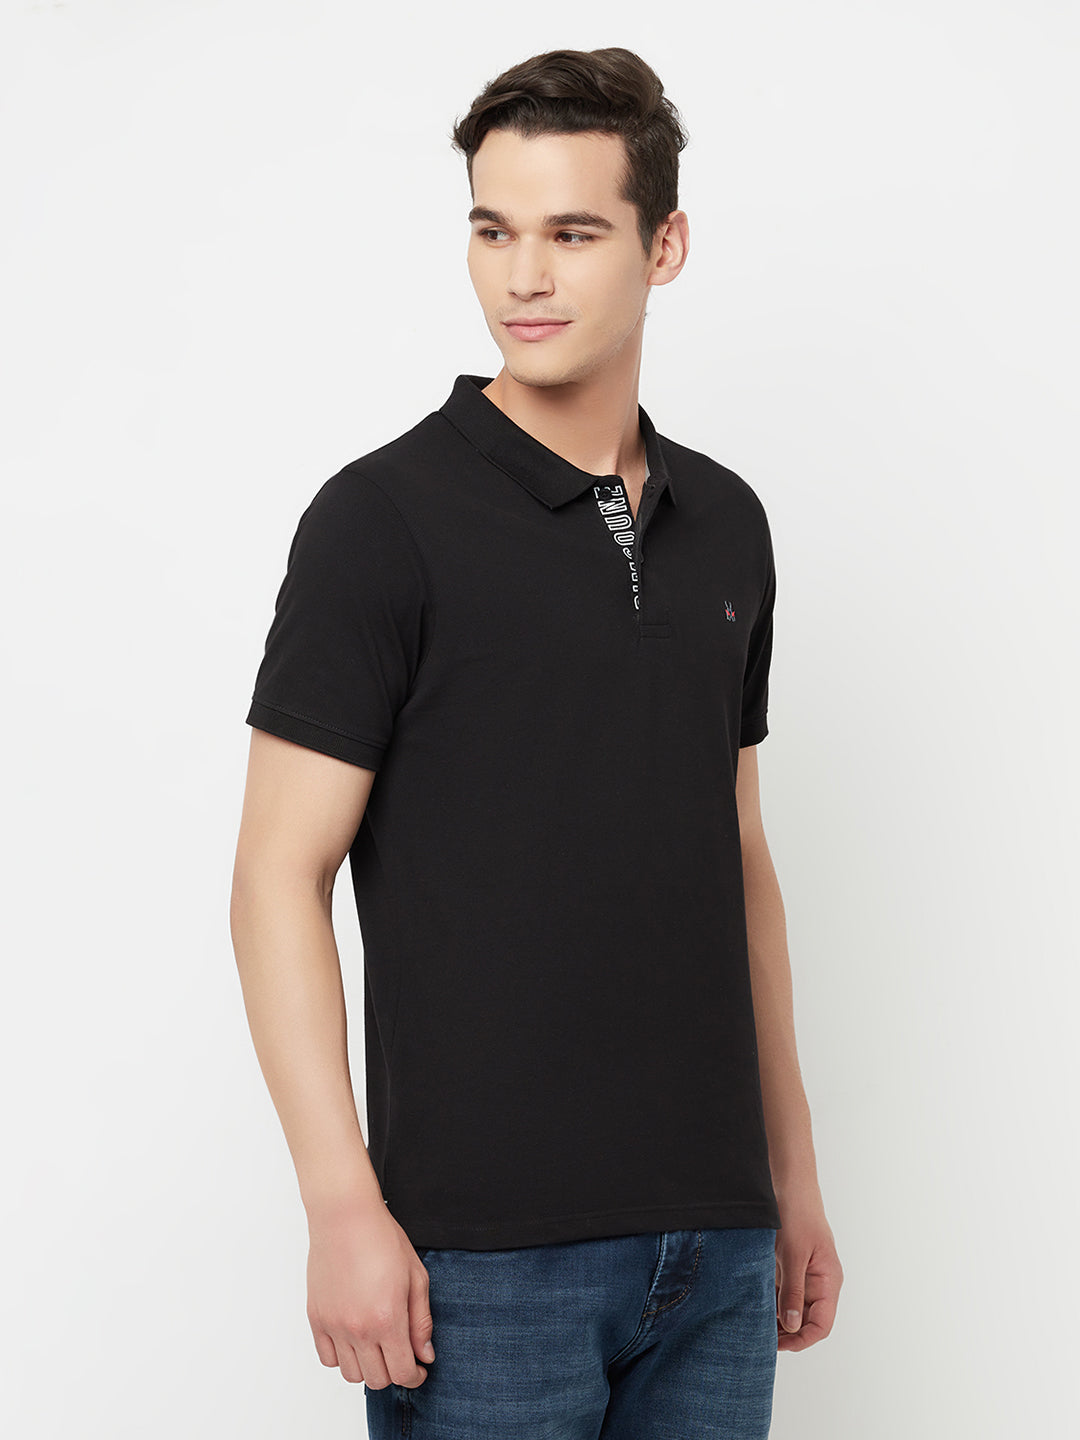 Black Polo T-Shirt - Men T-Shirts